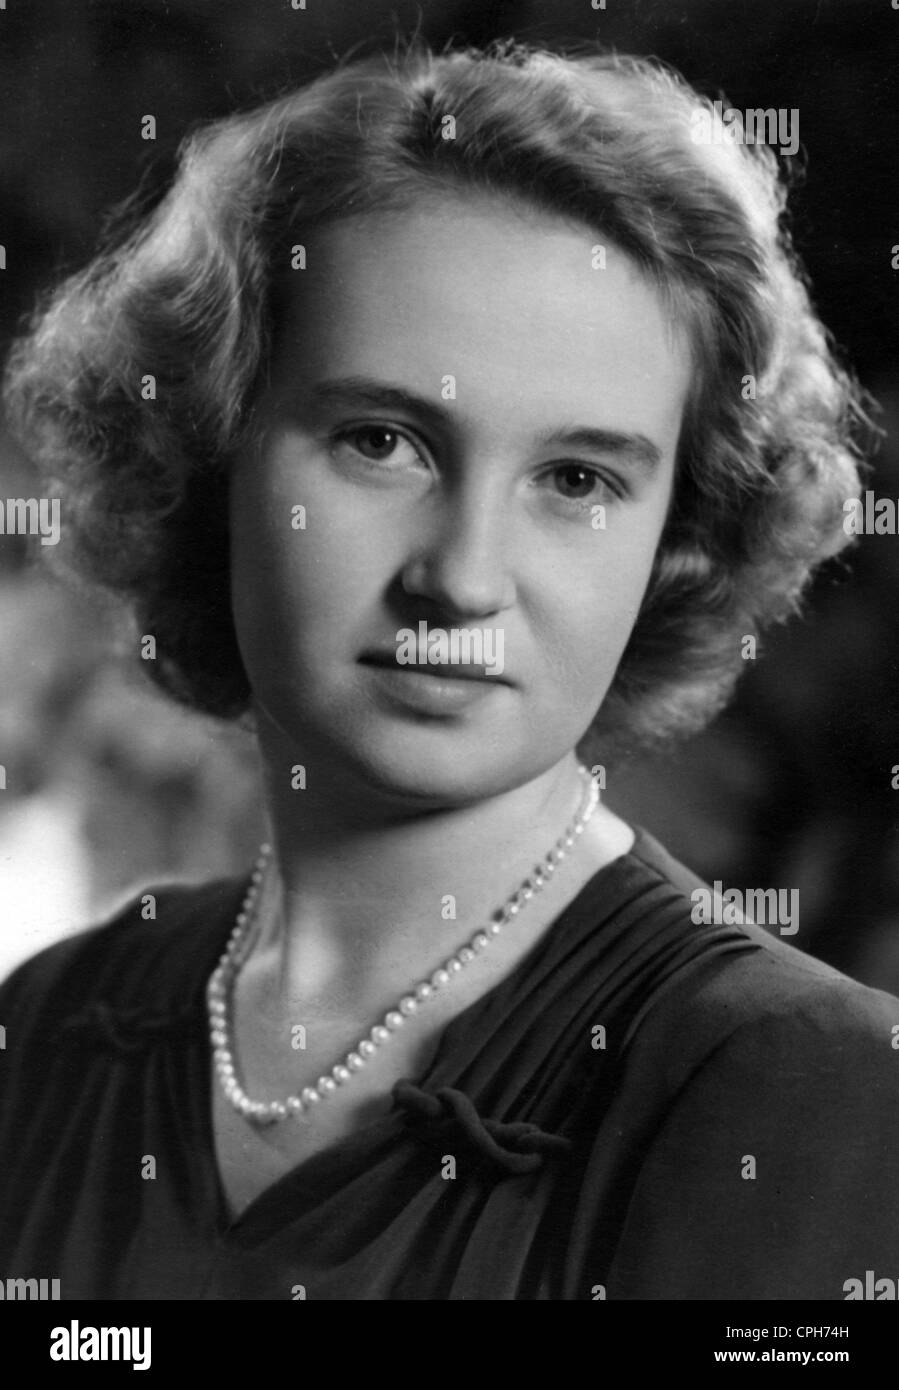 Elisabeth, 22.12.1922 - 22.11.2011, princesa de Luxemburgo, retrato, 1950er Jahre, Foto de stock